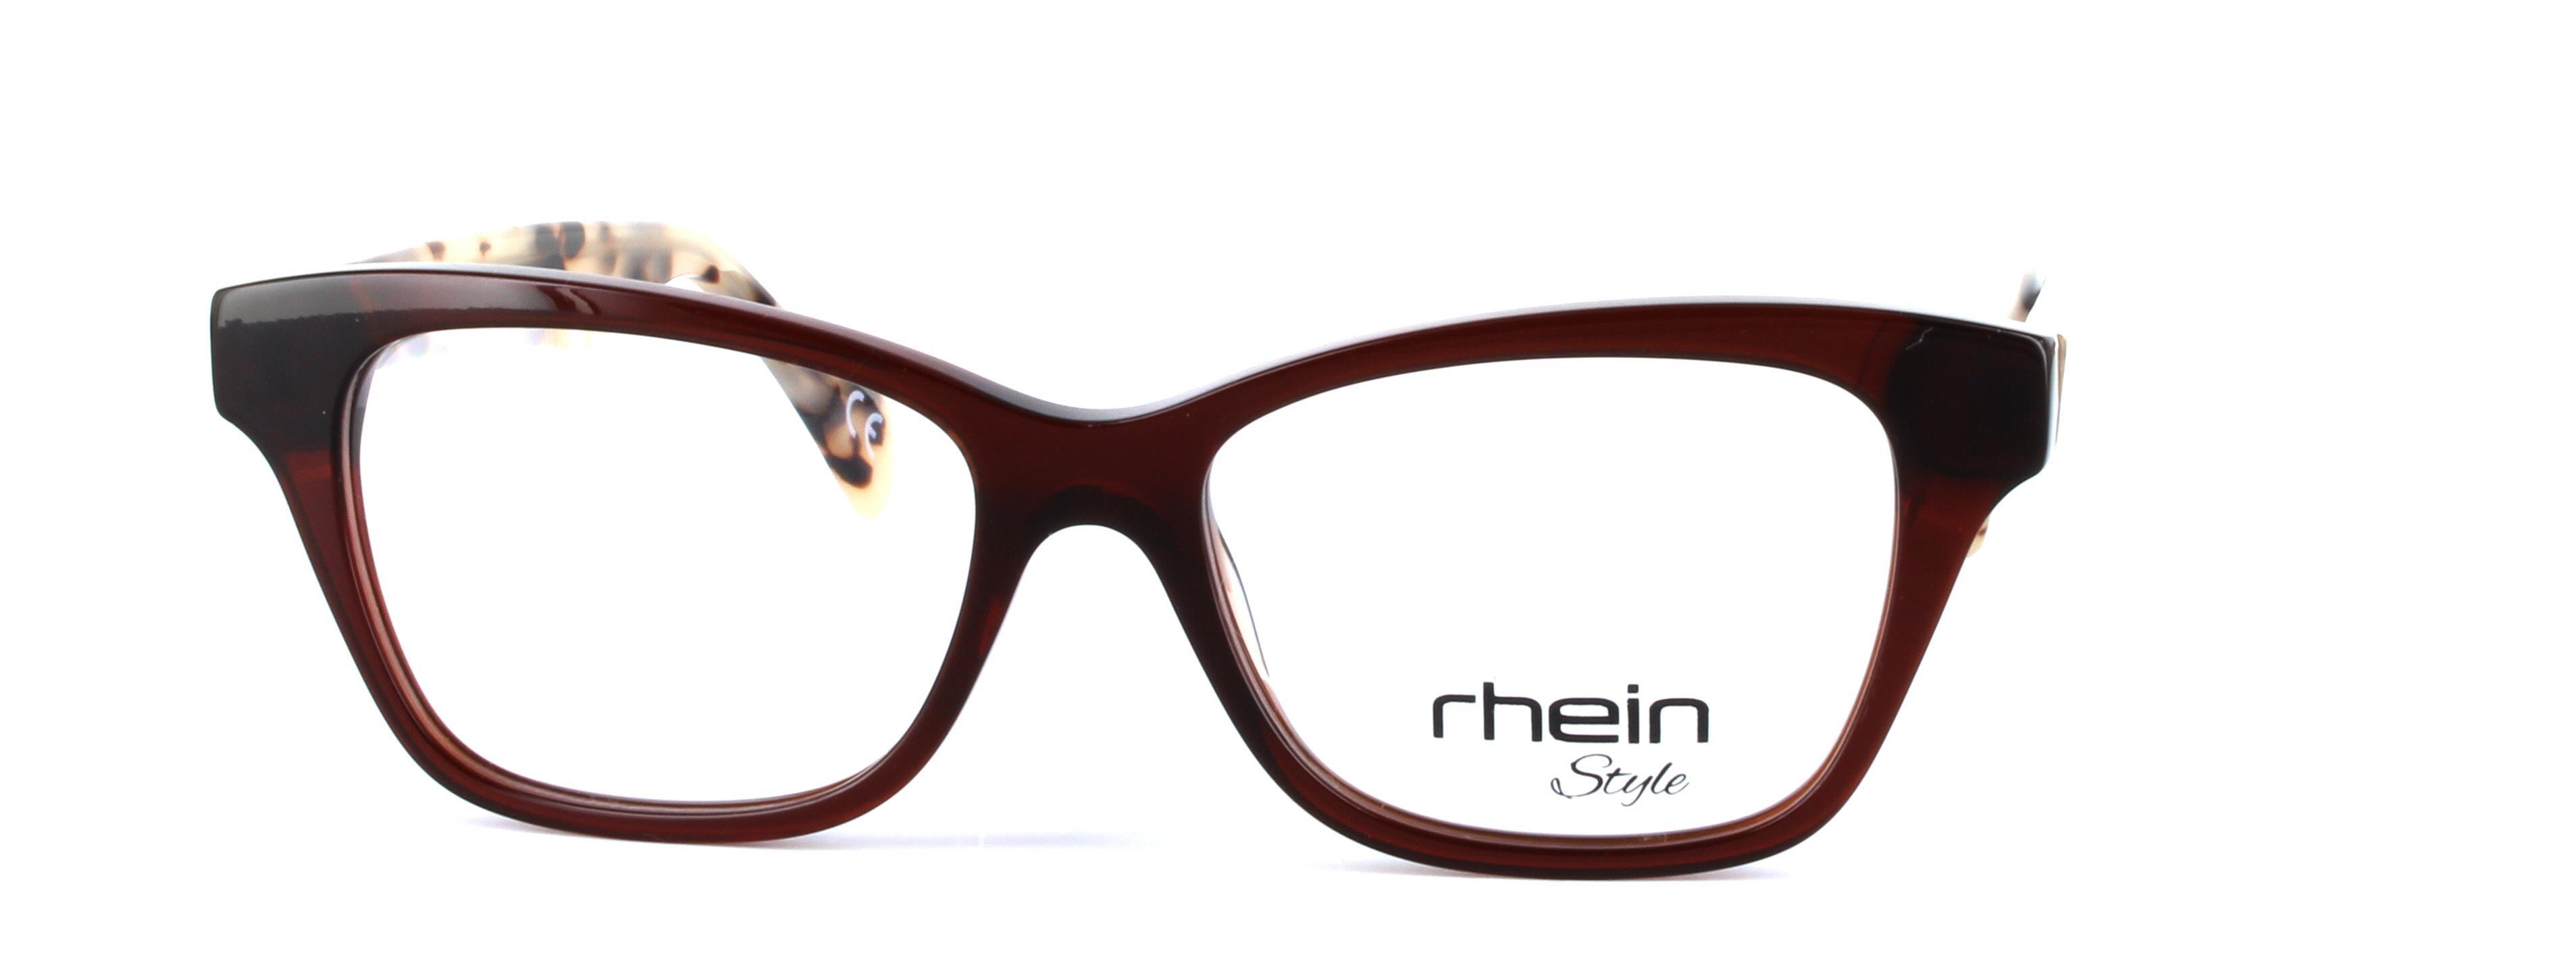 Felia Brown Full Rim Oval Round Plastic Glasses - Image View 5